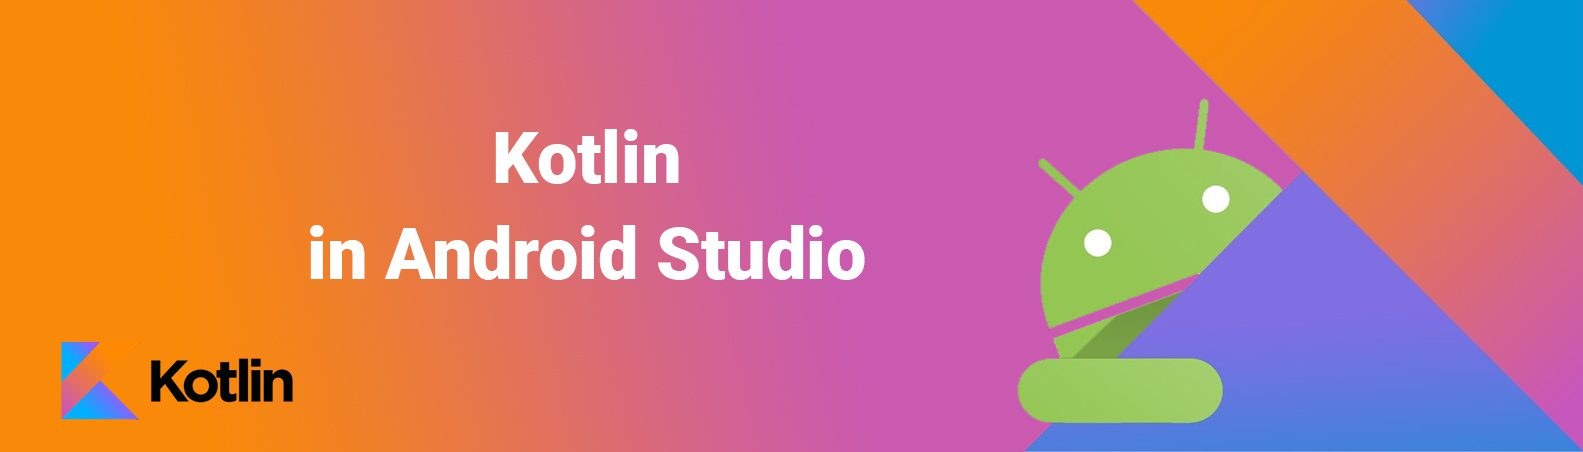 android studio kotlin